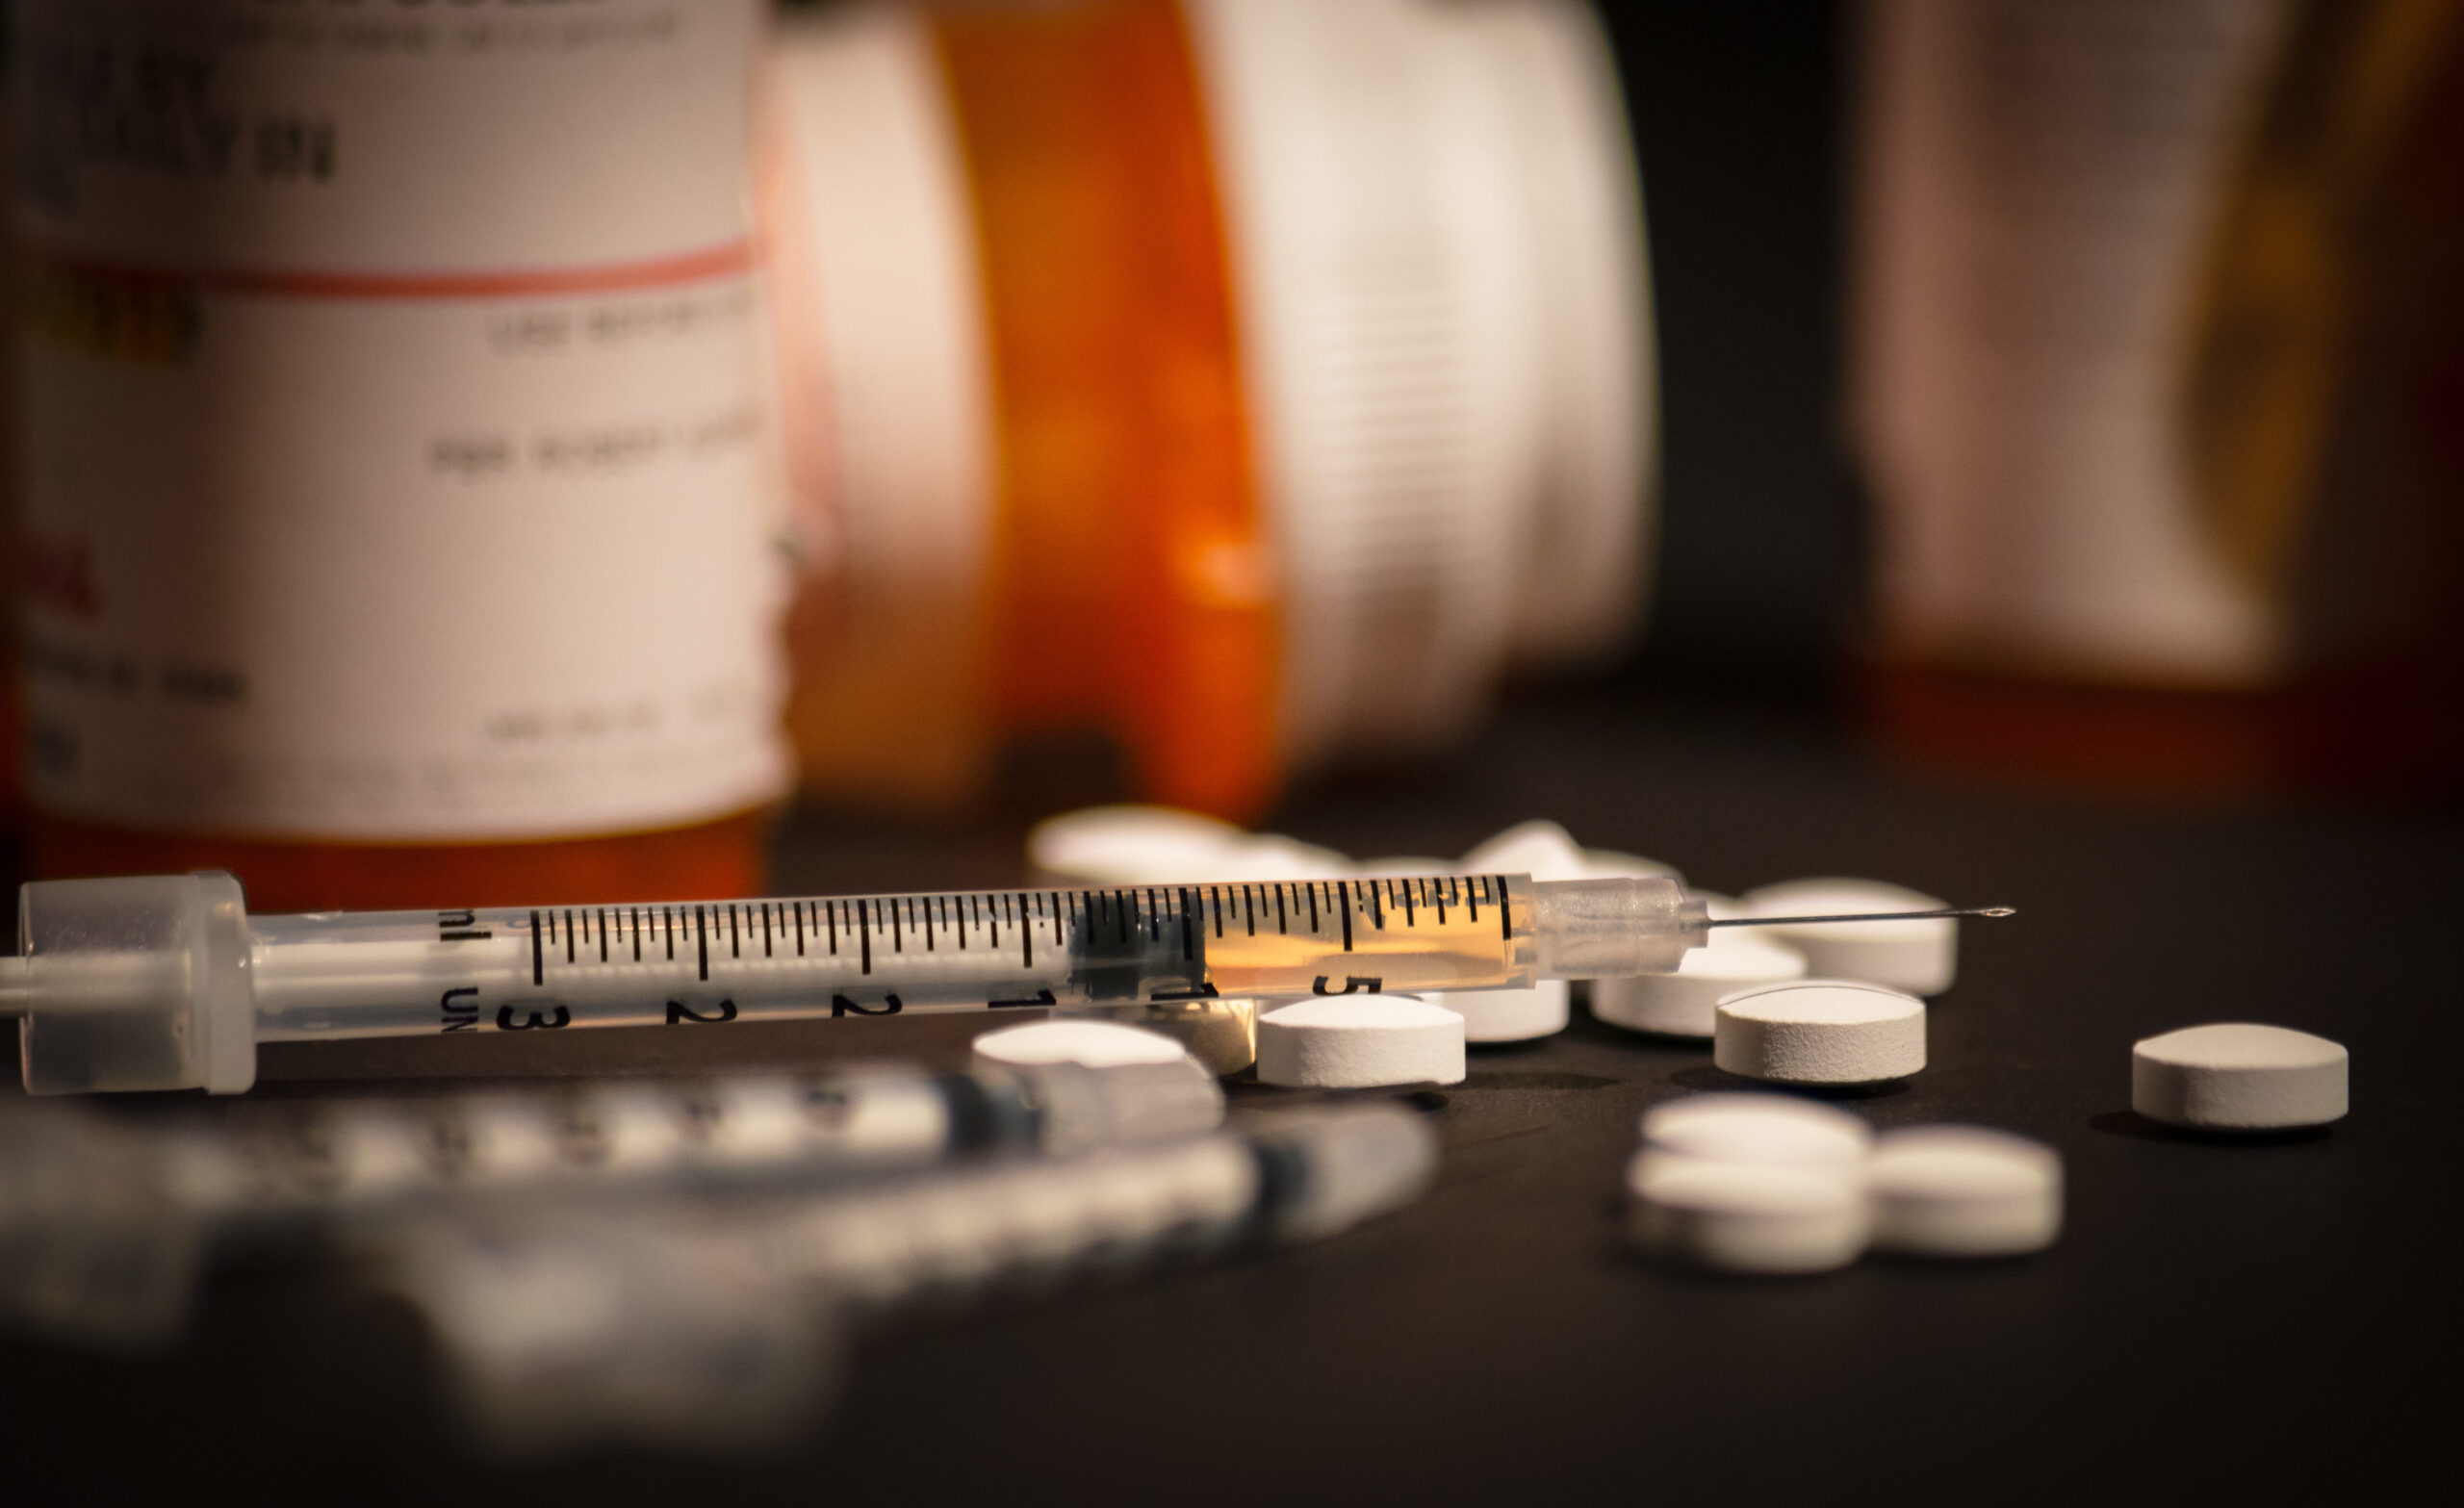 Loaded Syringe and Pills Fentanyl